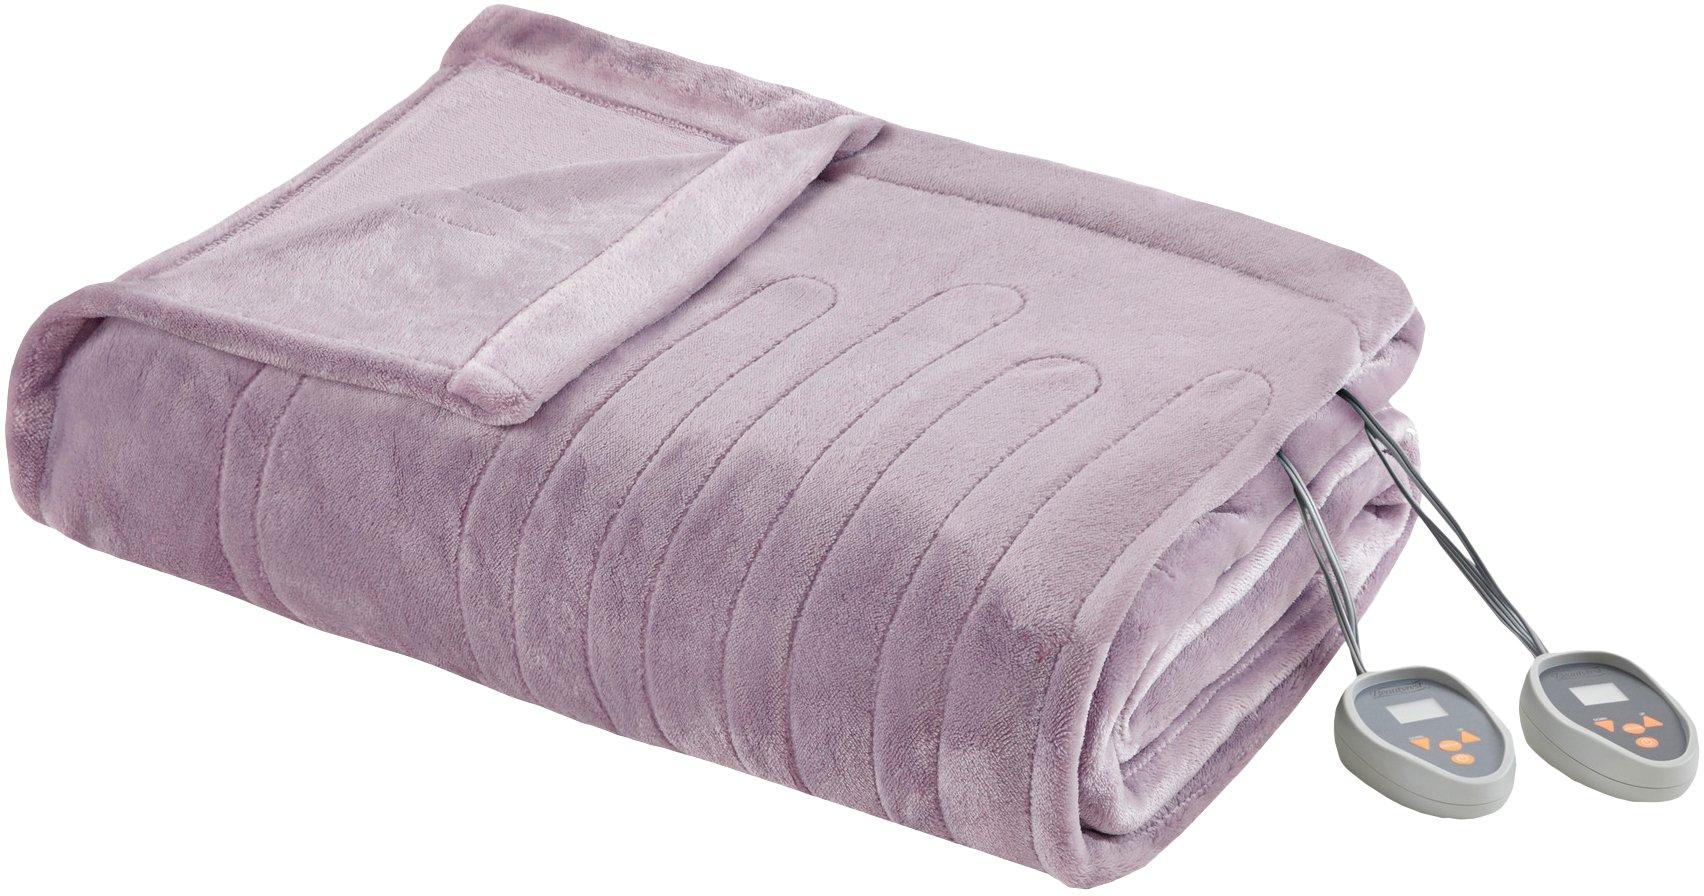 Photos - Duvet Beautyrest Heated Plush Blanket 